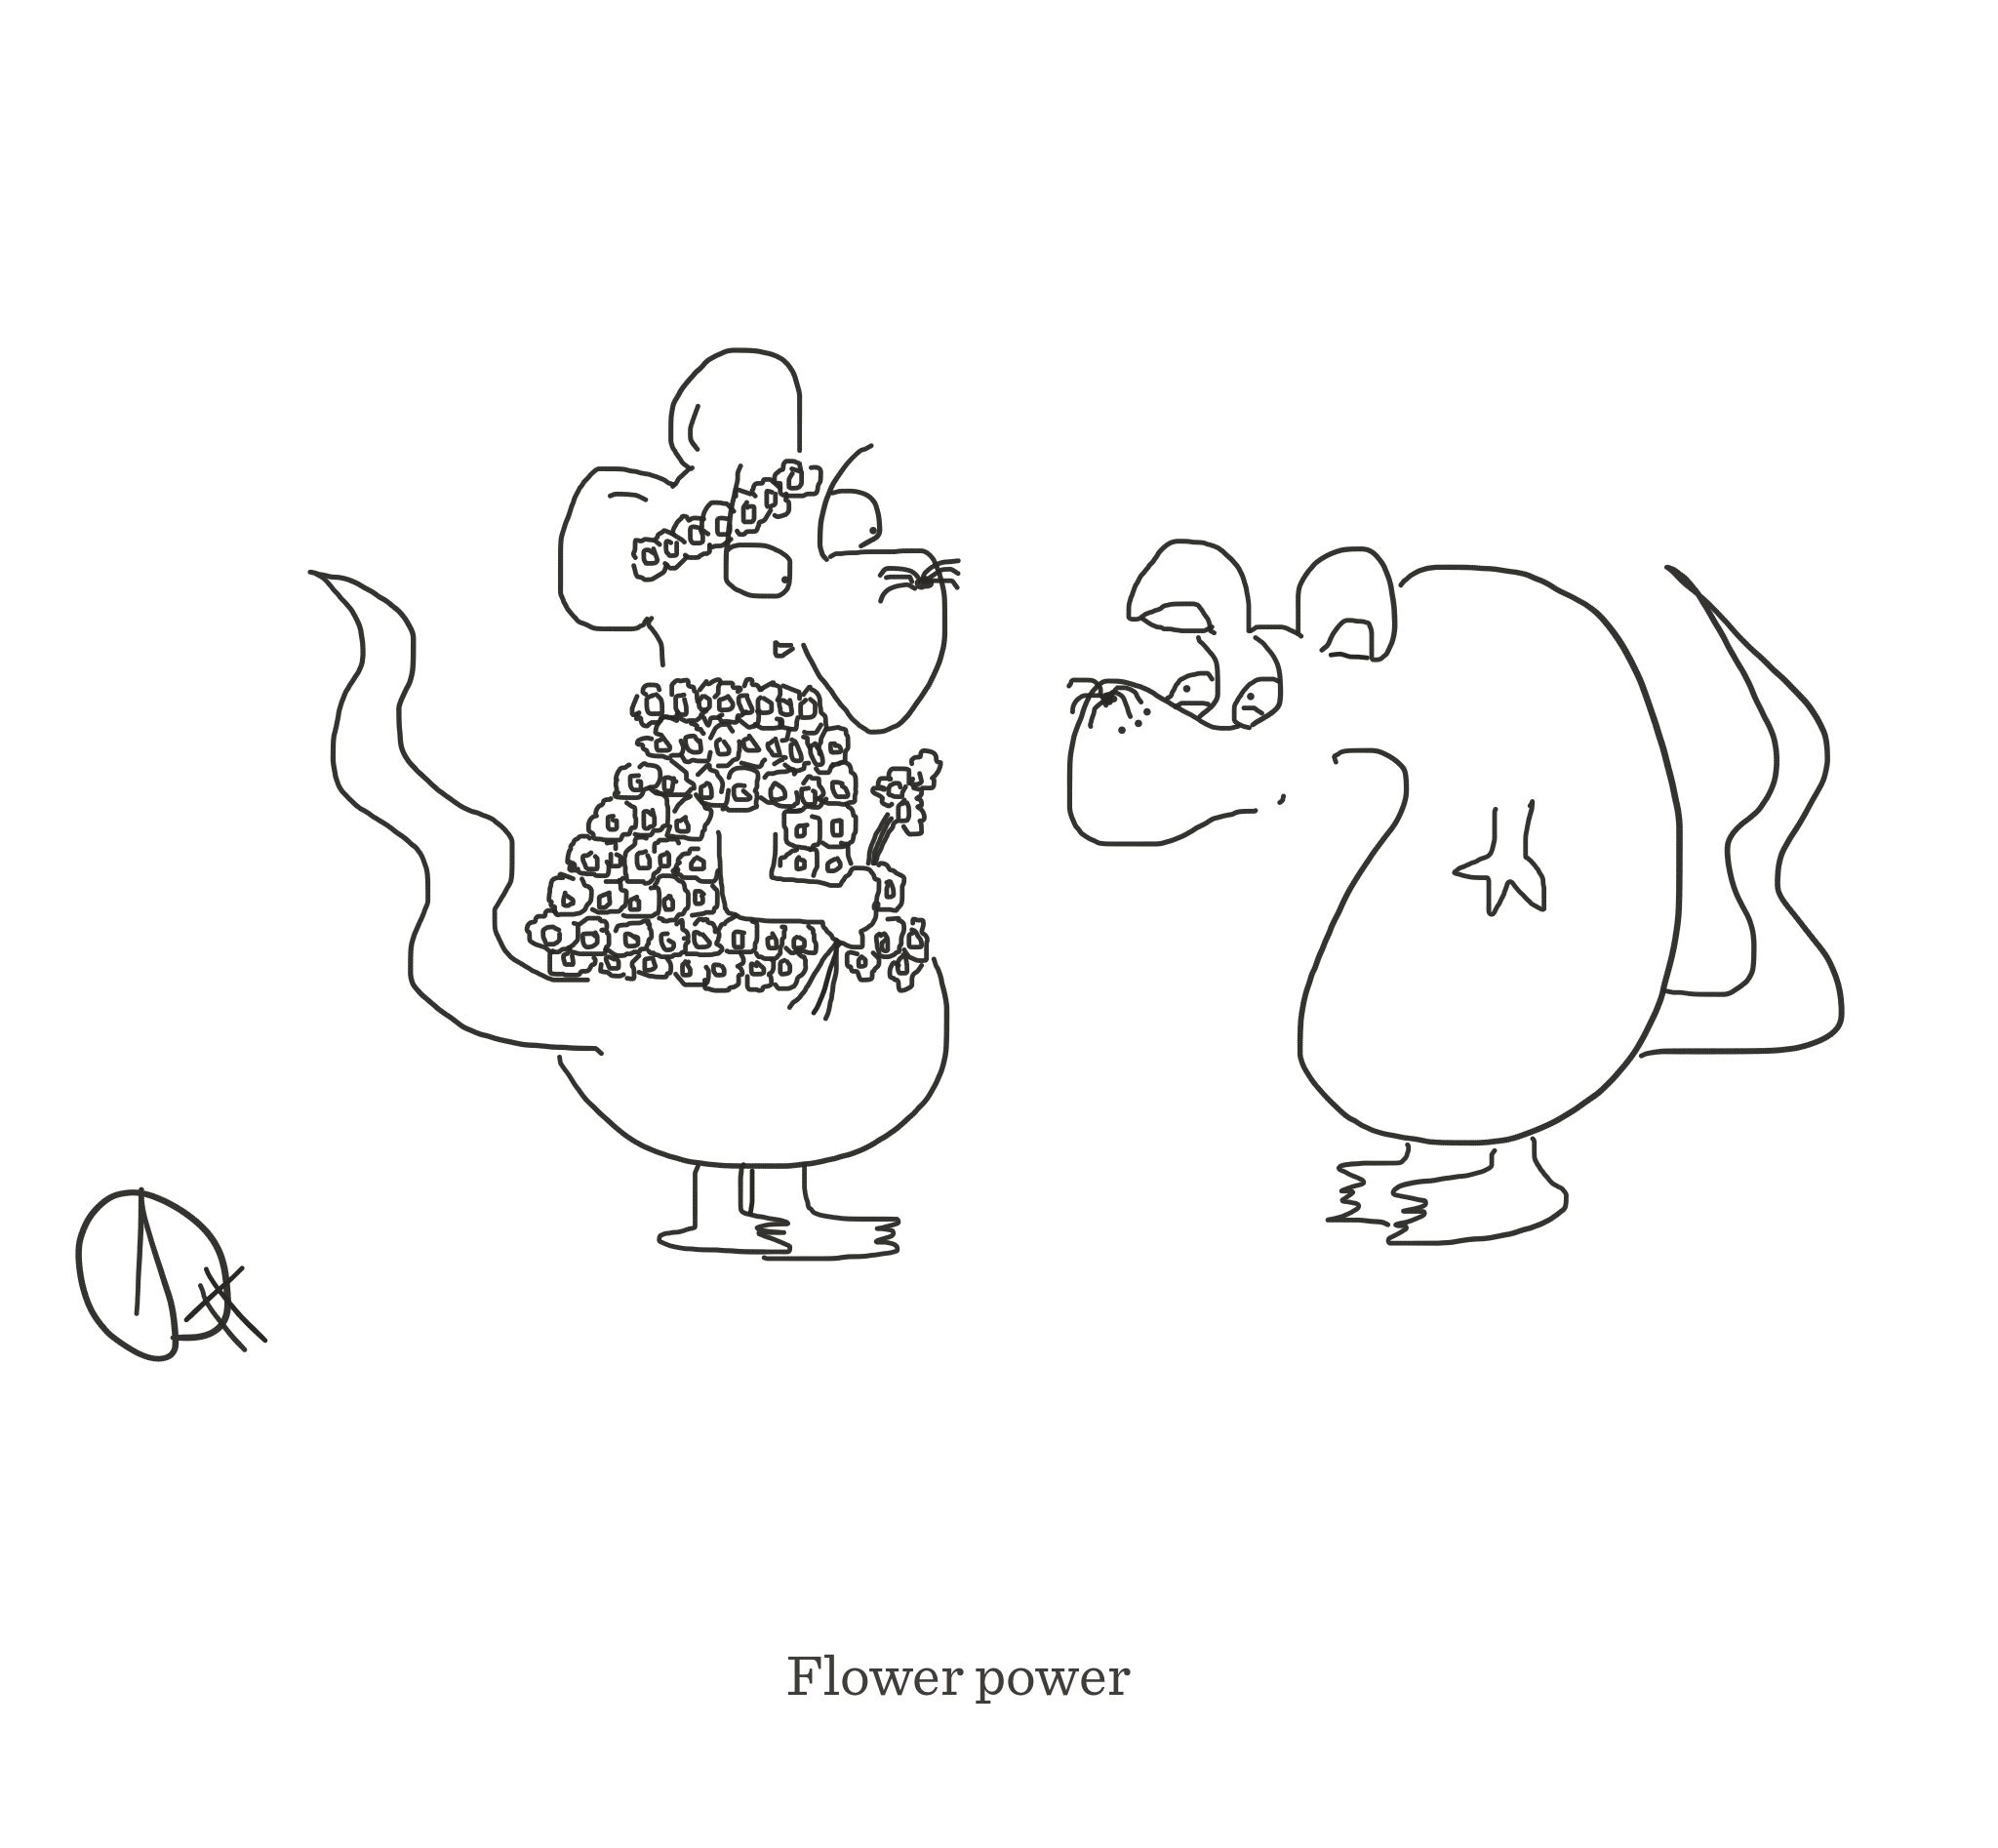 Flower power, The Happy Rat cartoon